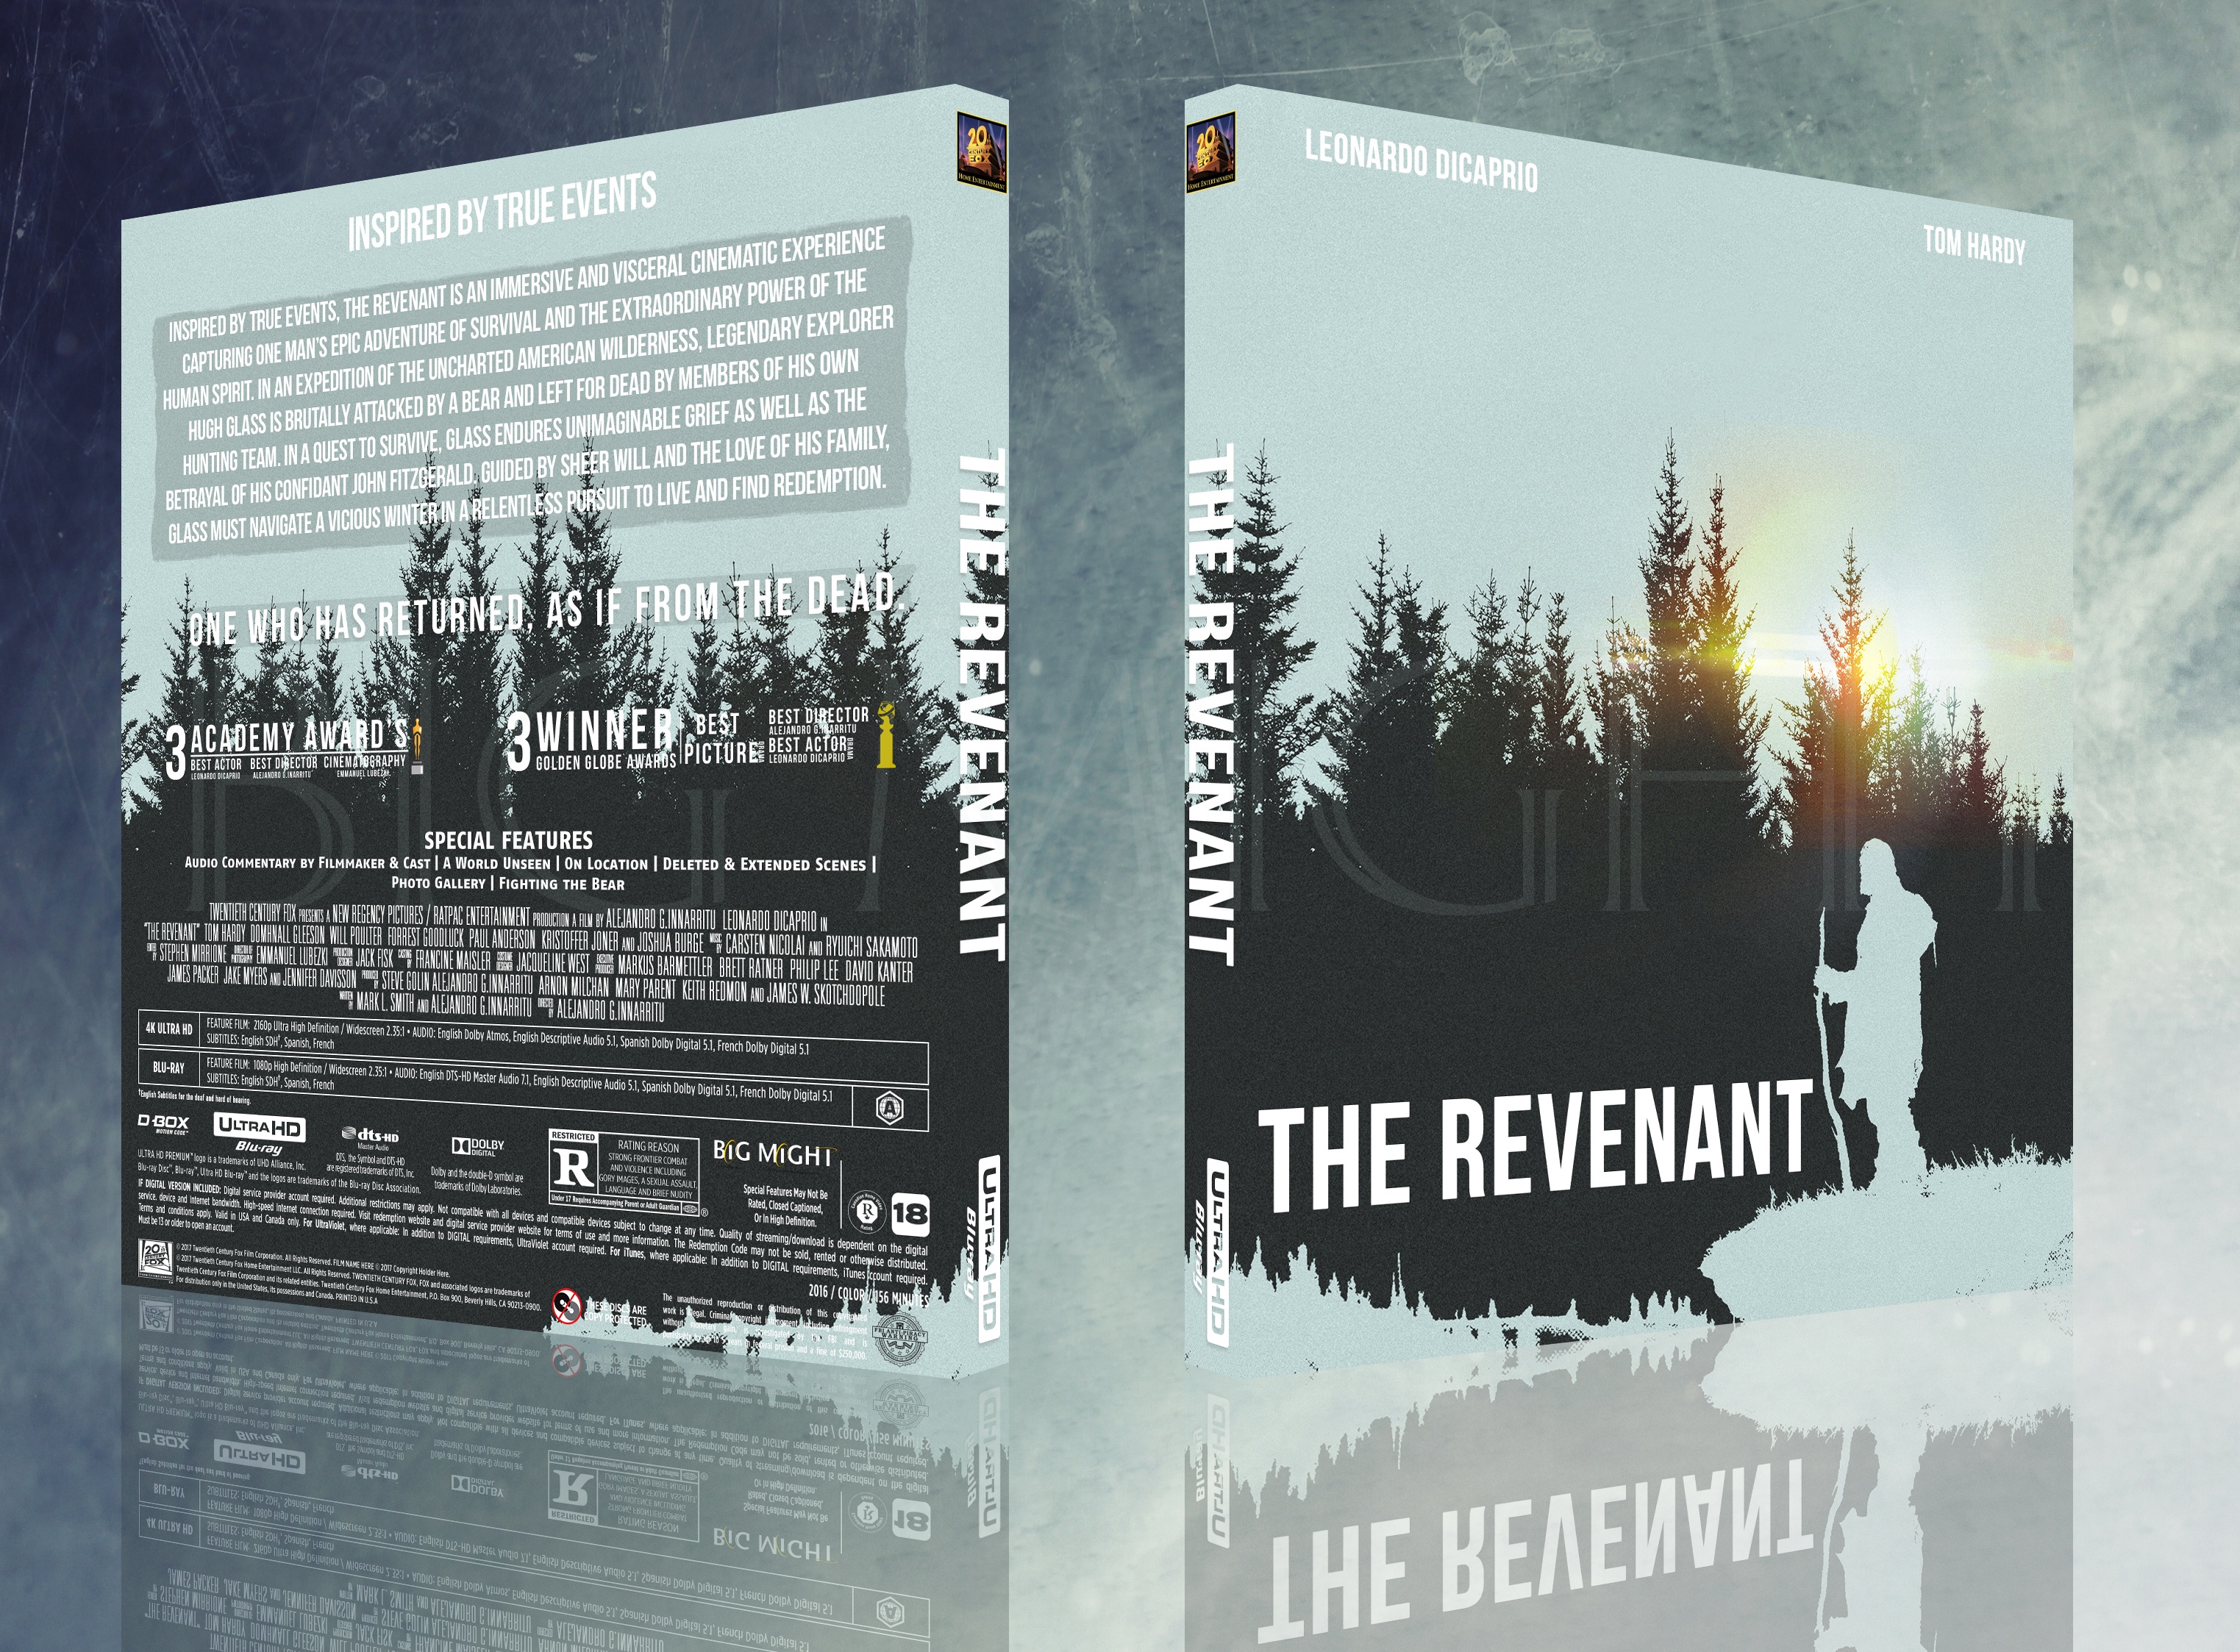 The Revenant box cover